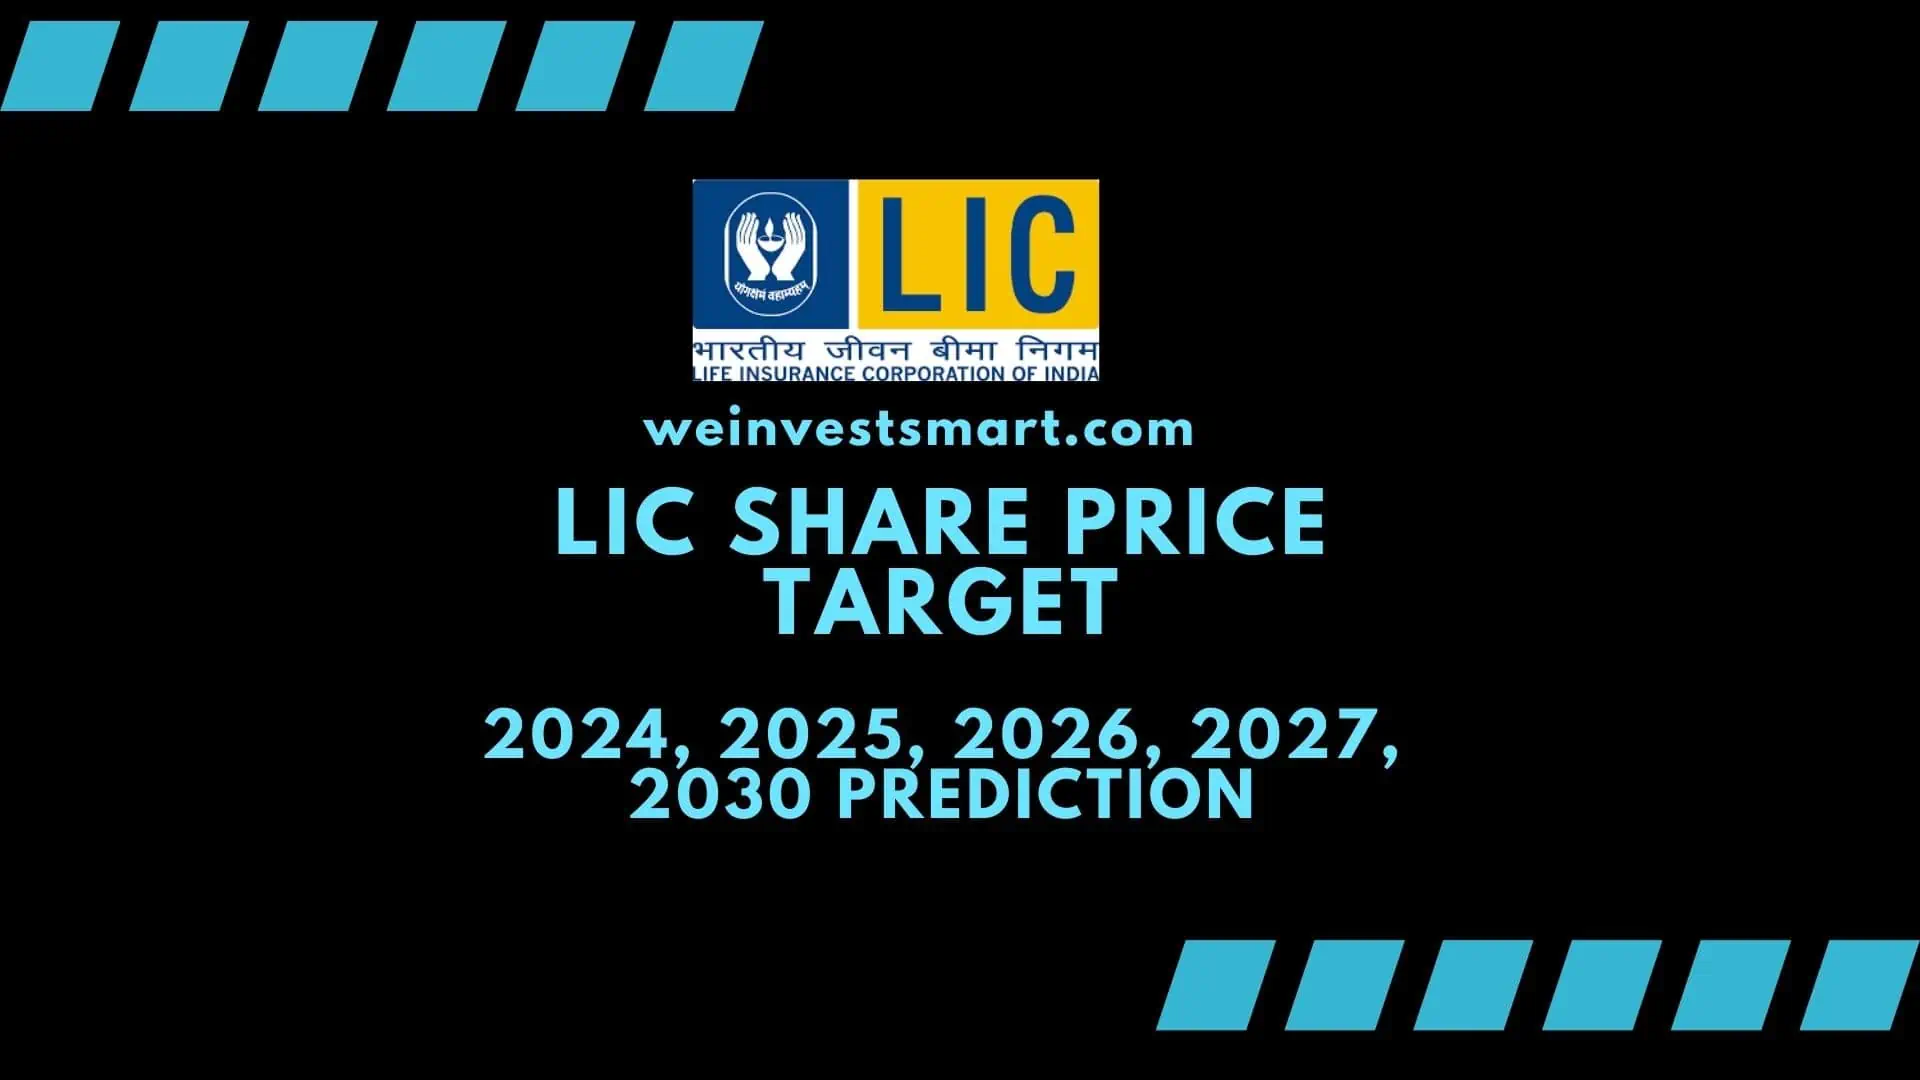 LIC share price target 2024, 2025, 2026, 2027, 2030 prediction